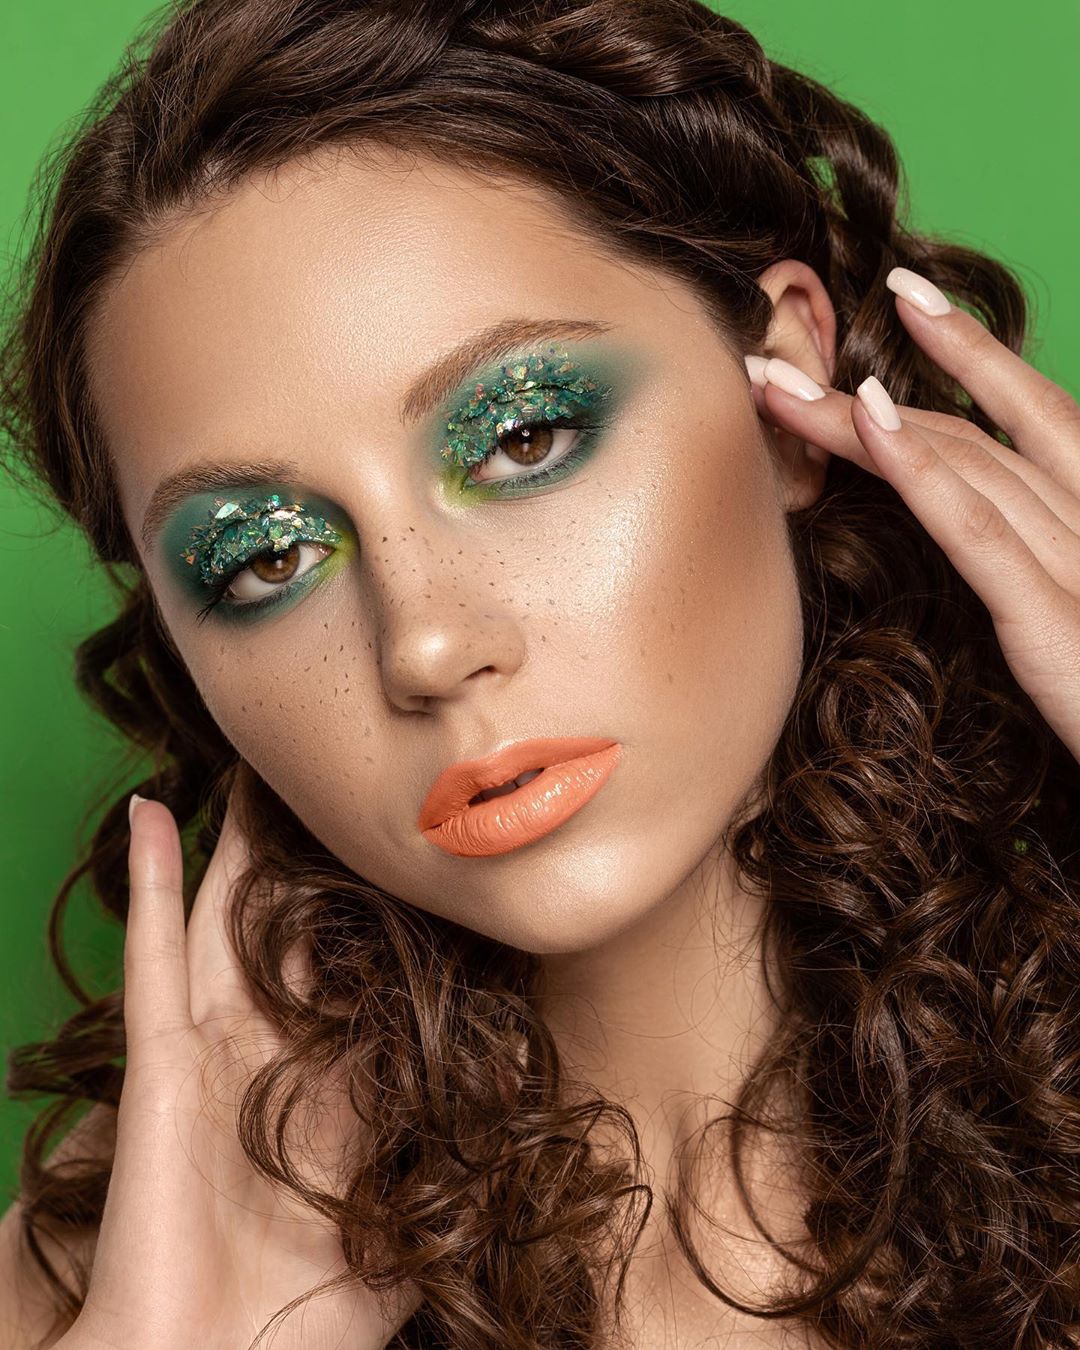 Lady With Creative Make Up And Shining Green Eyeshadows